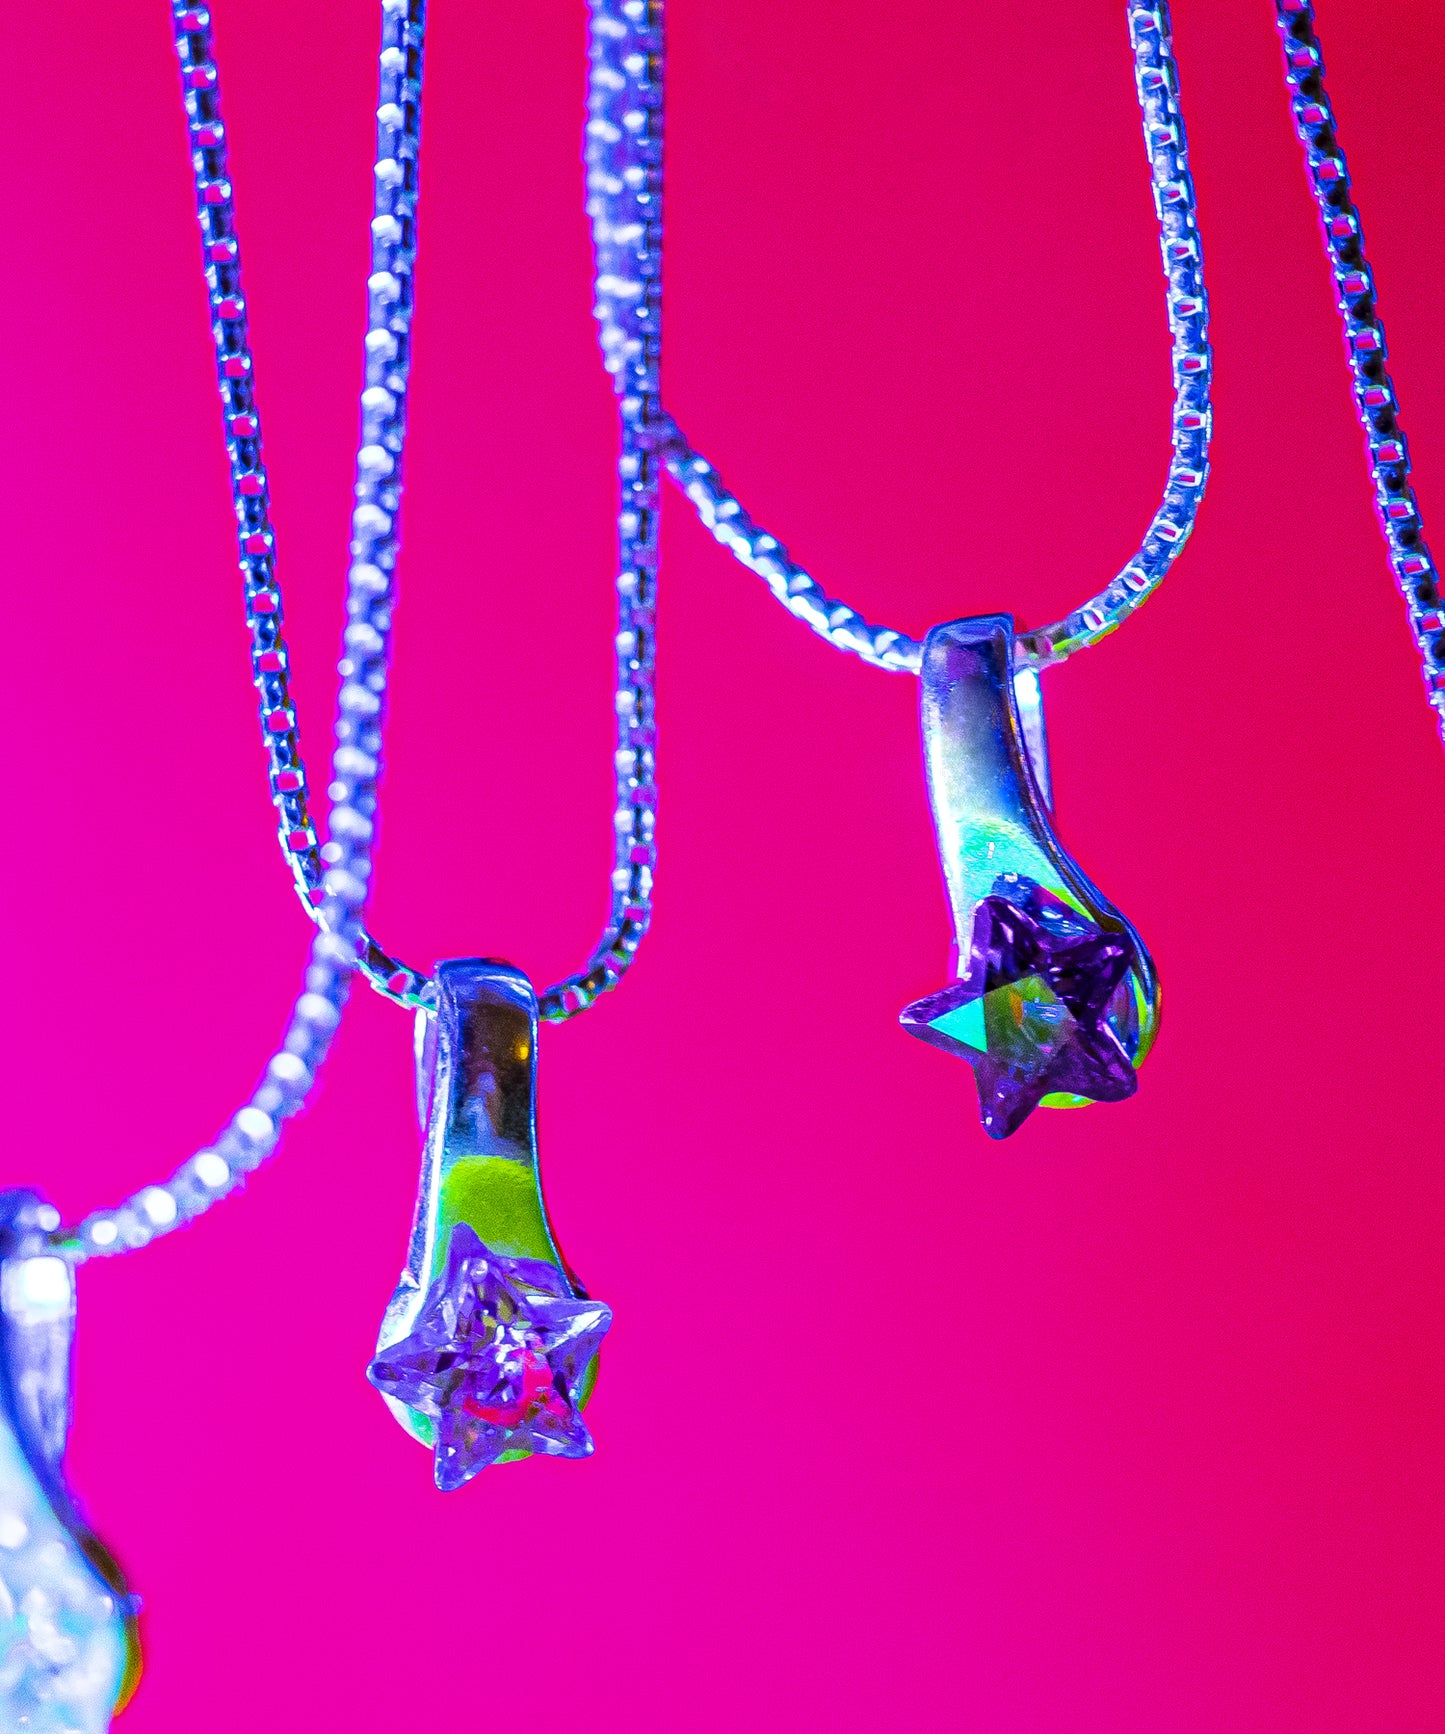 Violet Mini Star Necklace